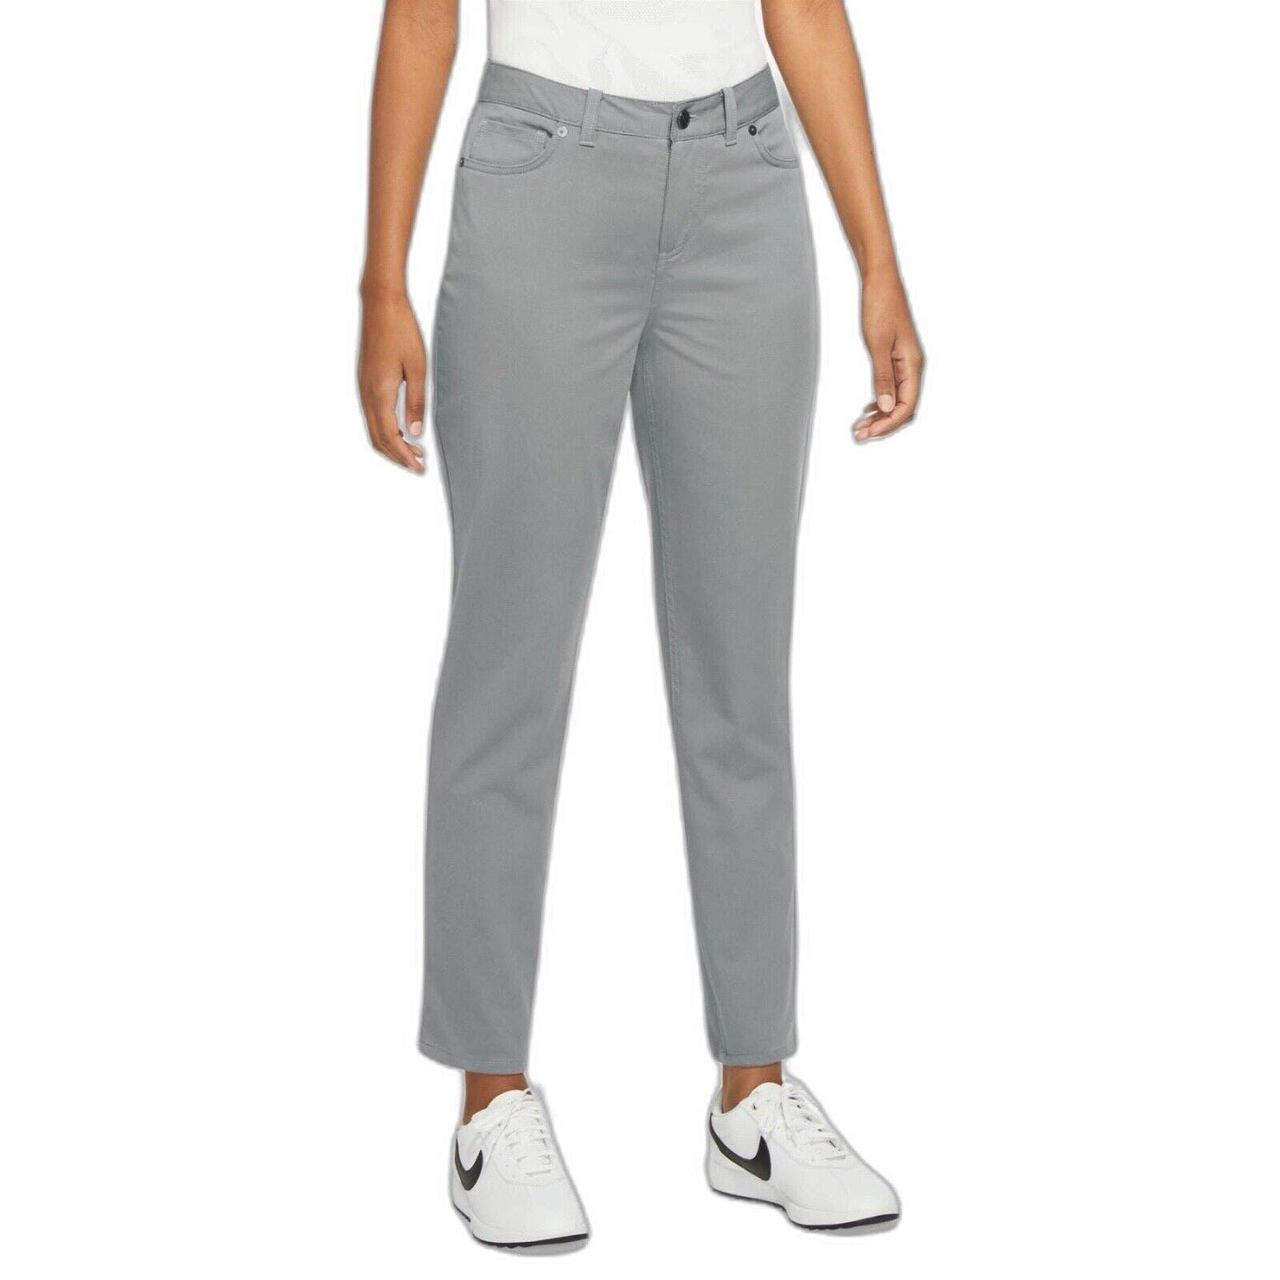 Nike Dri Fit Women's Slim Fit Gray Golf Pants - Depop